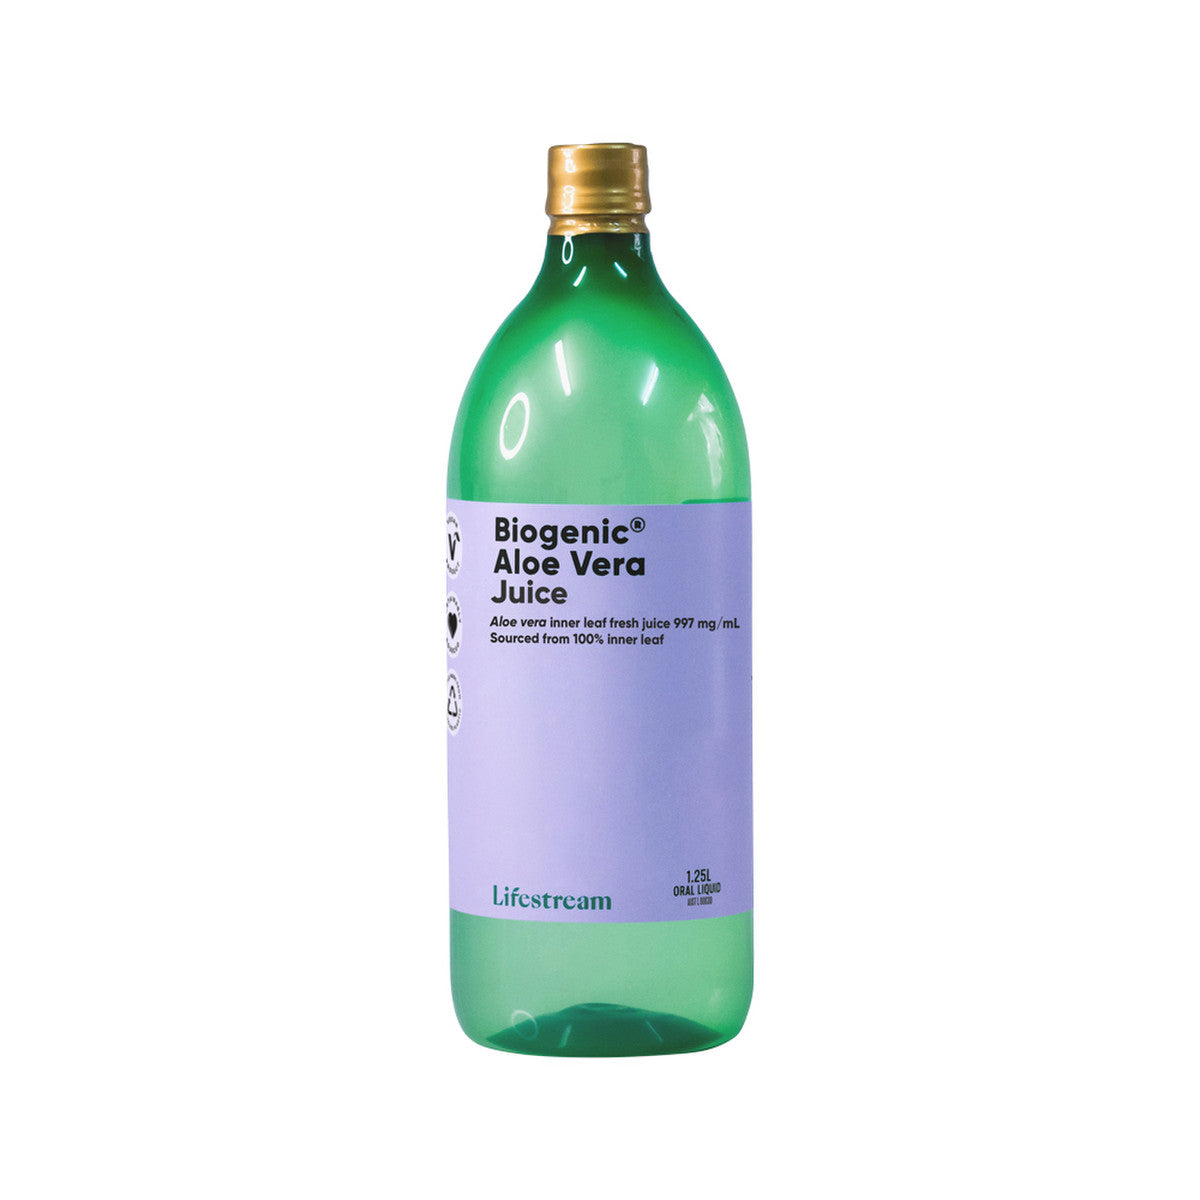 Lifestream - Biogenic Aloe Vera Juice